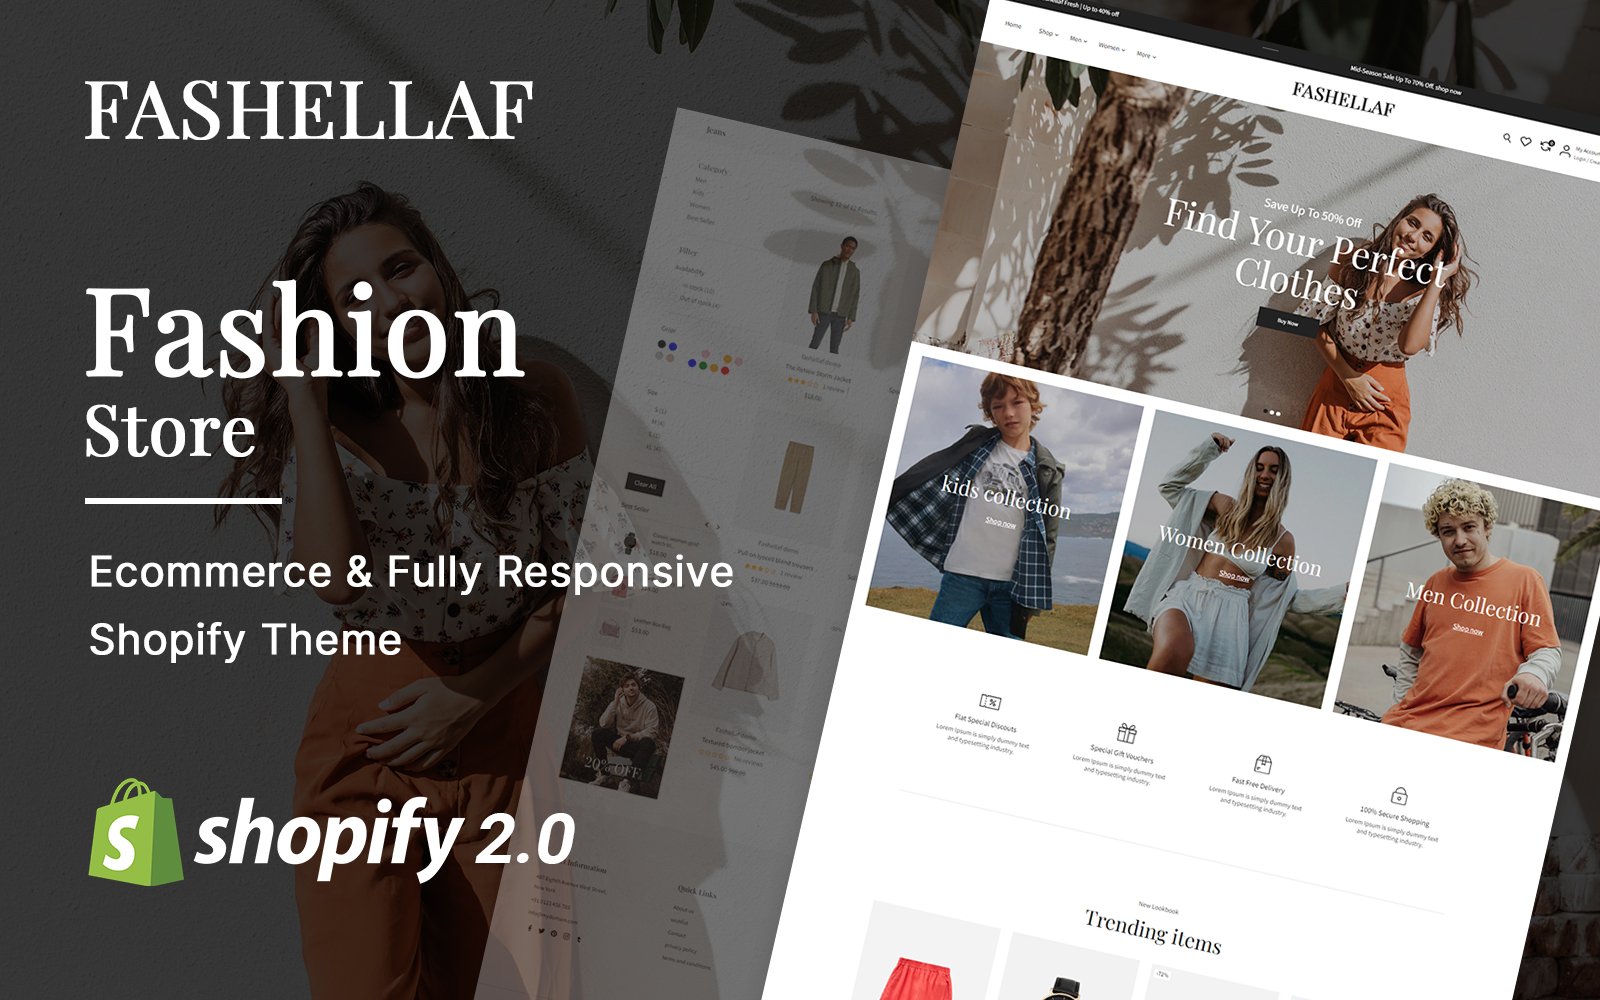 Fashellaf - Clothes Fashion, online Shopify Theme